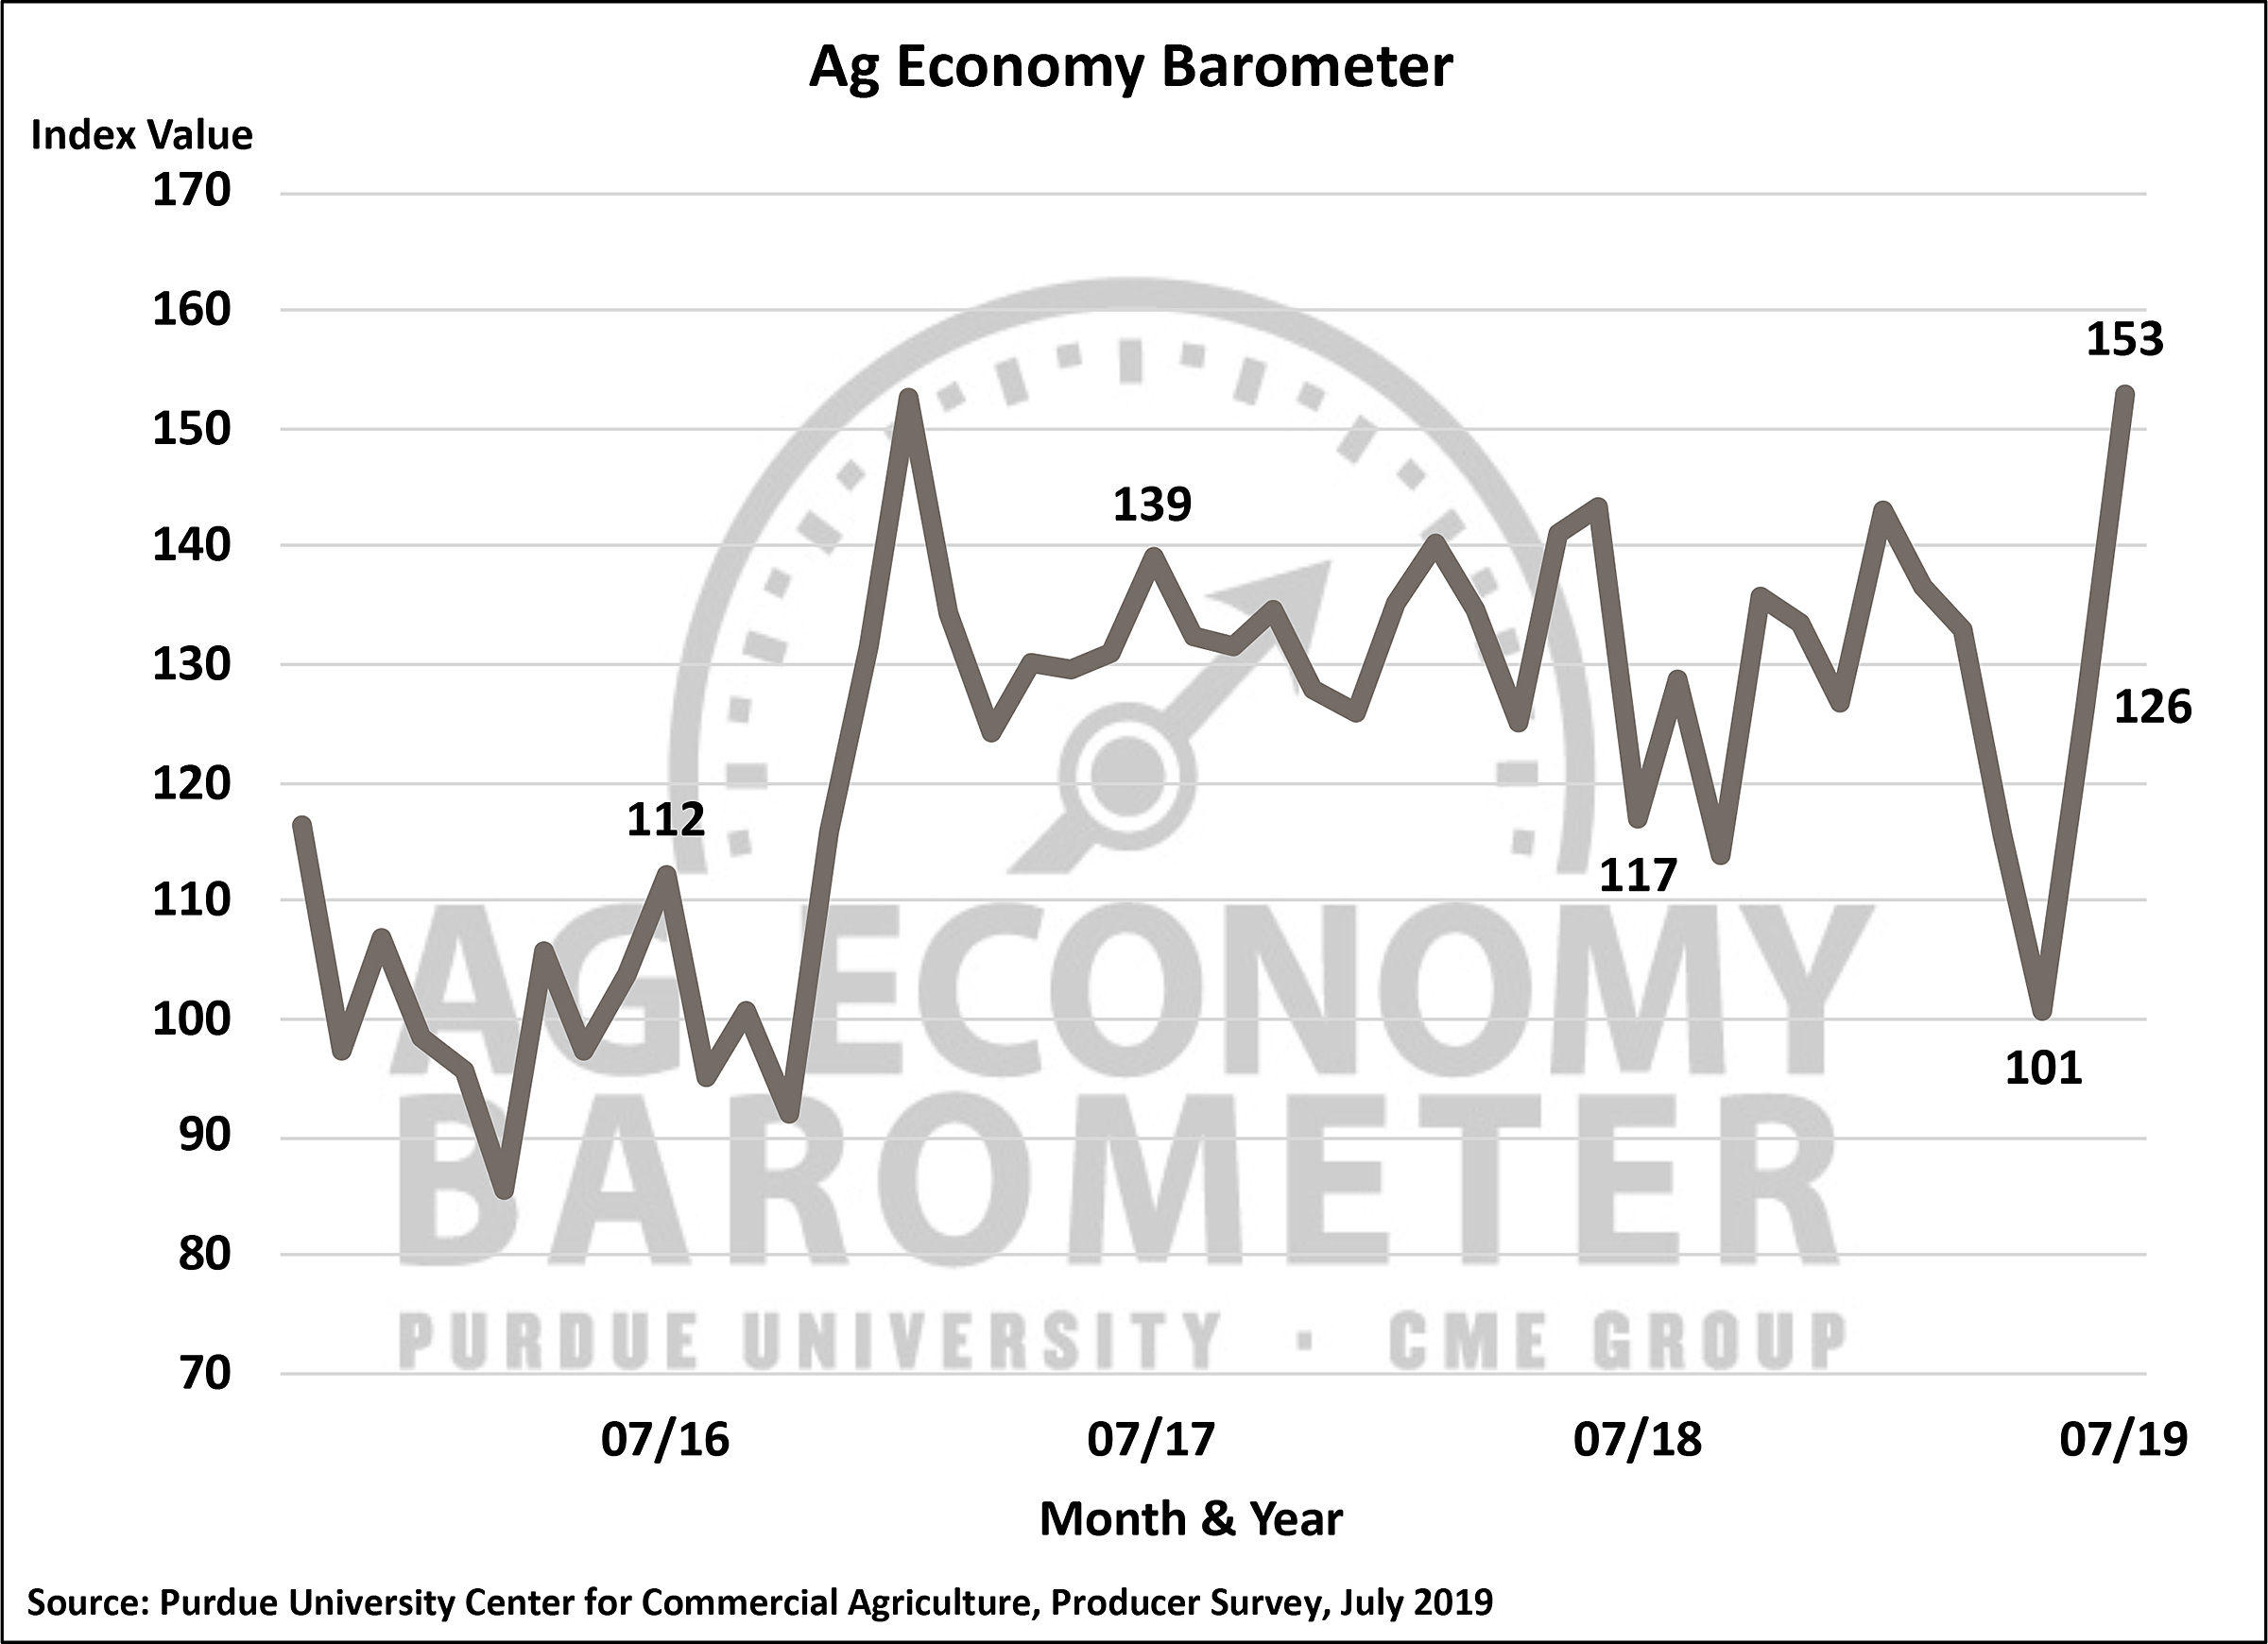 The Purdue University/CME Group Ag Economy Barometer